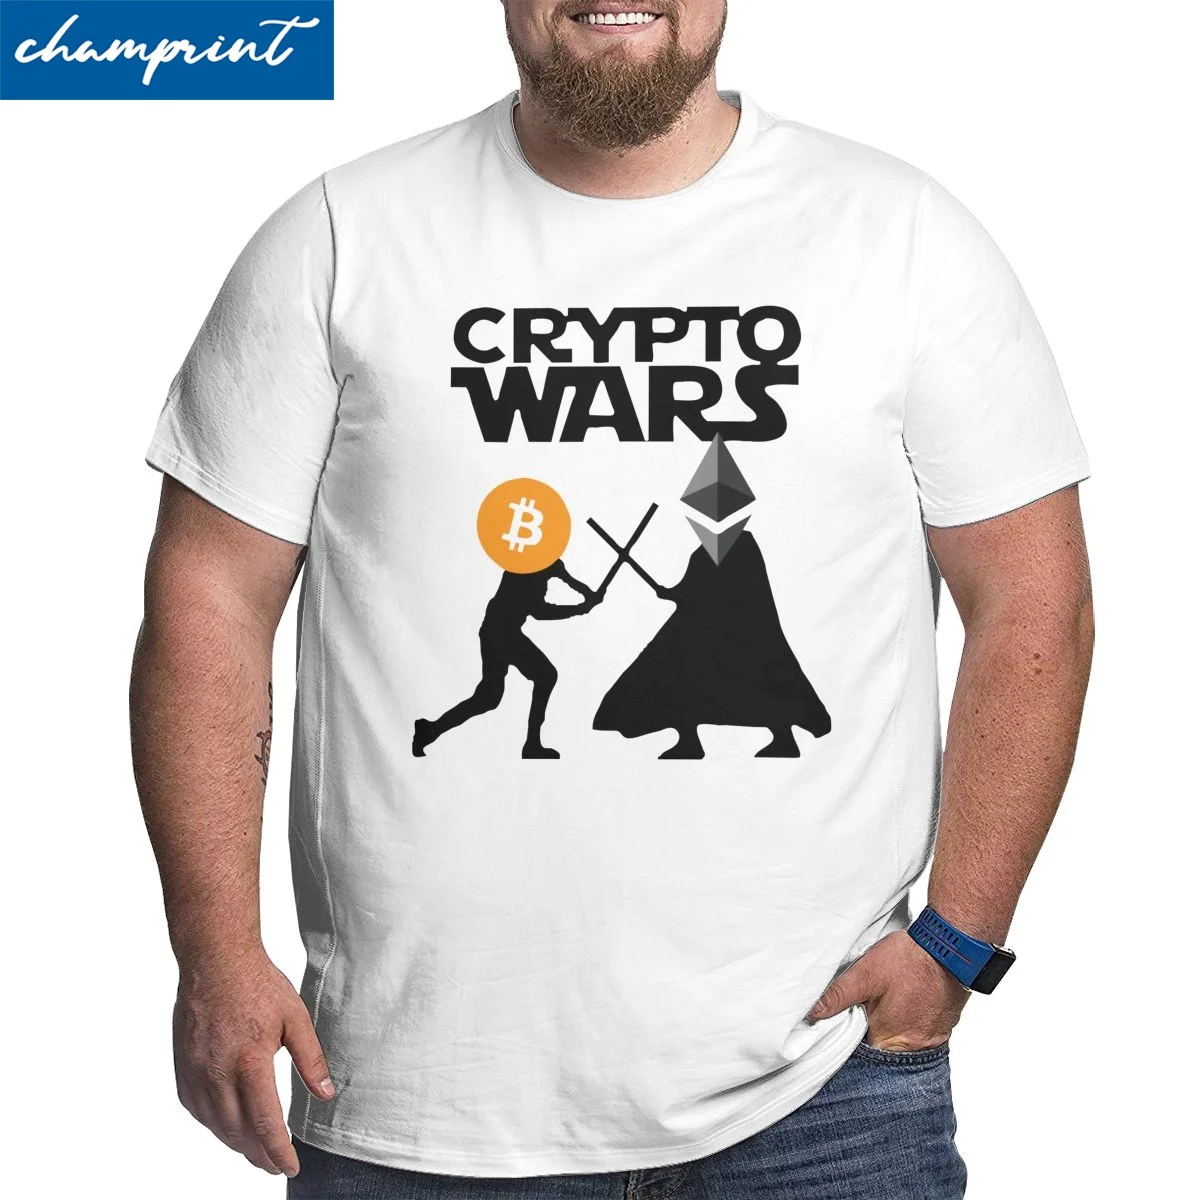 

Bitcoin Ethereum Crypto Wars T Shirt Men Novelty T-Shirts Btc Blockchain Geek Big Tall Tees Plus Size Big Size Large 6XL Clothes